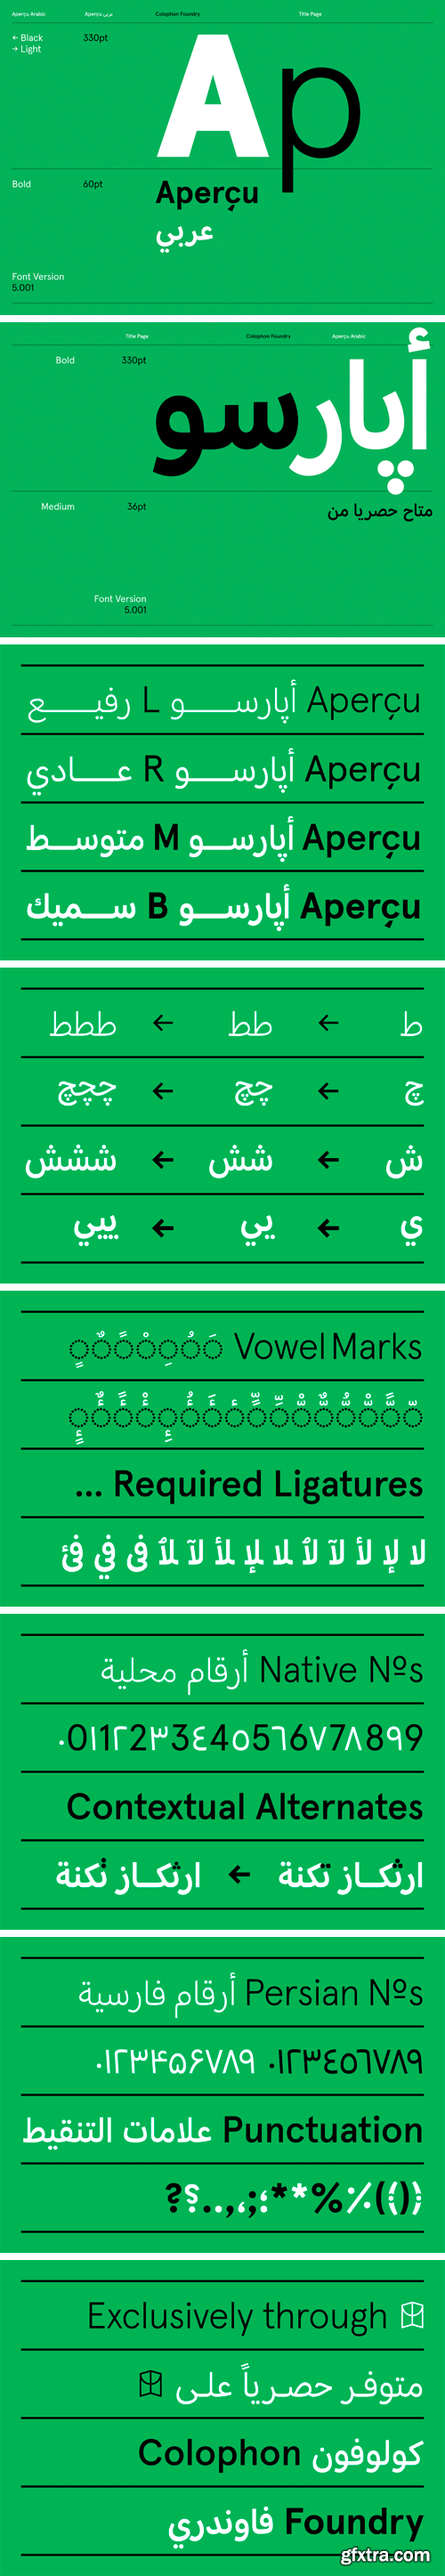 Apercu Arabic Font Family